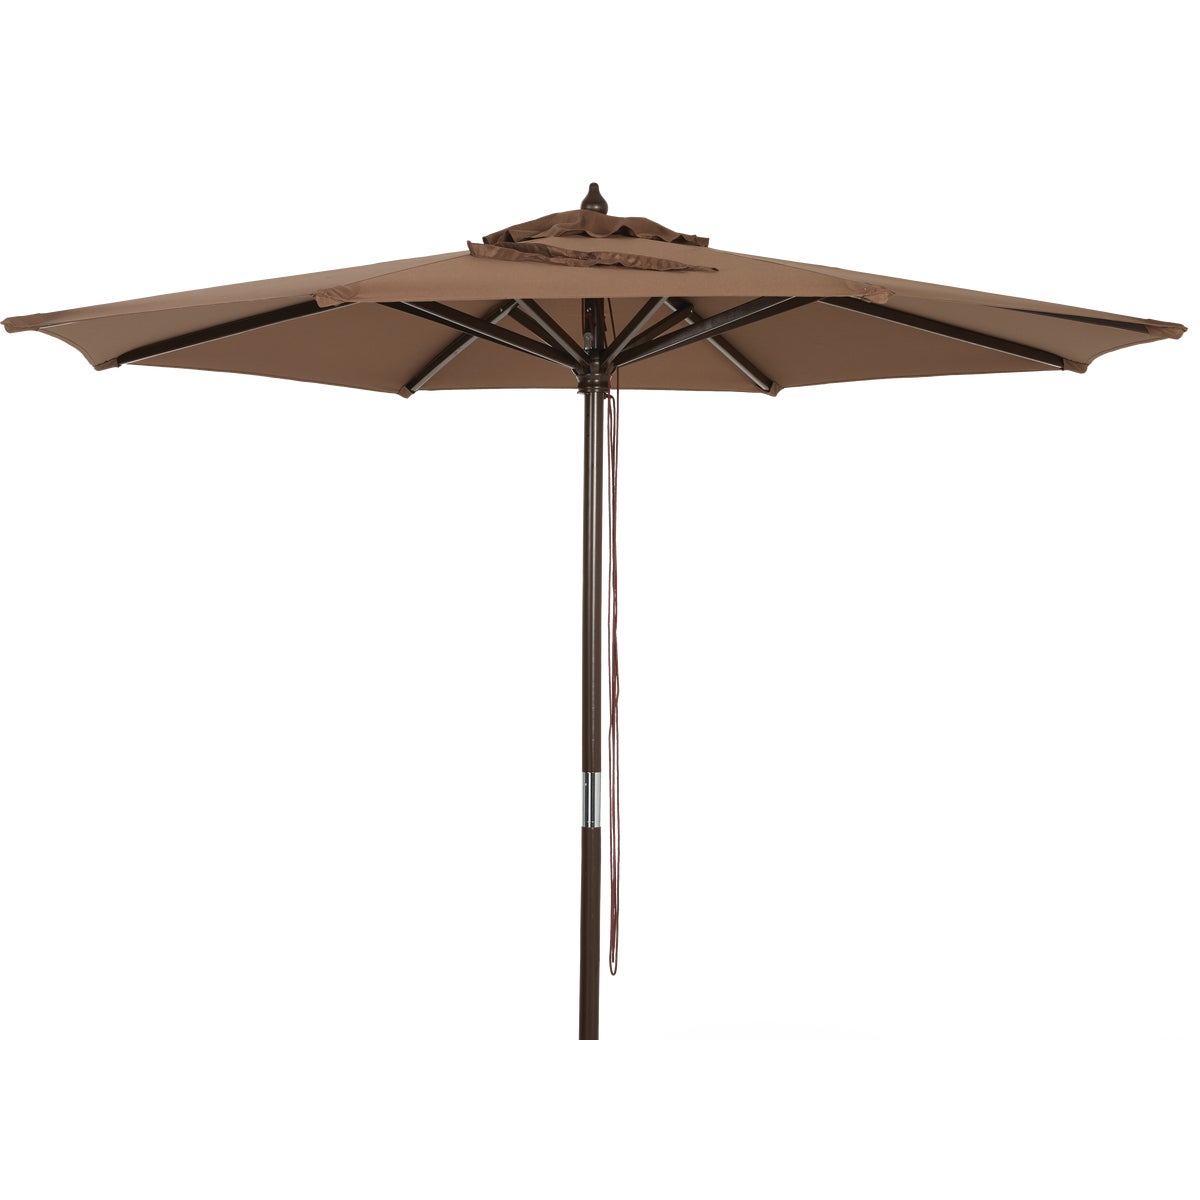 Item 804878, Decorative wood pole market umbrella.